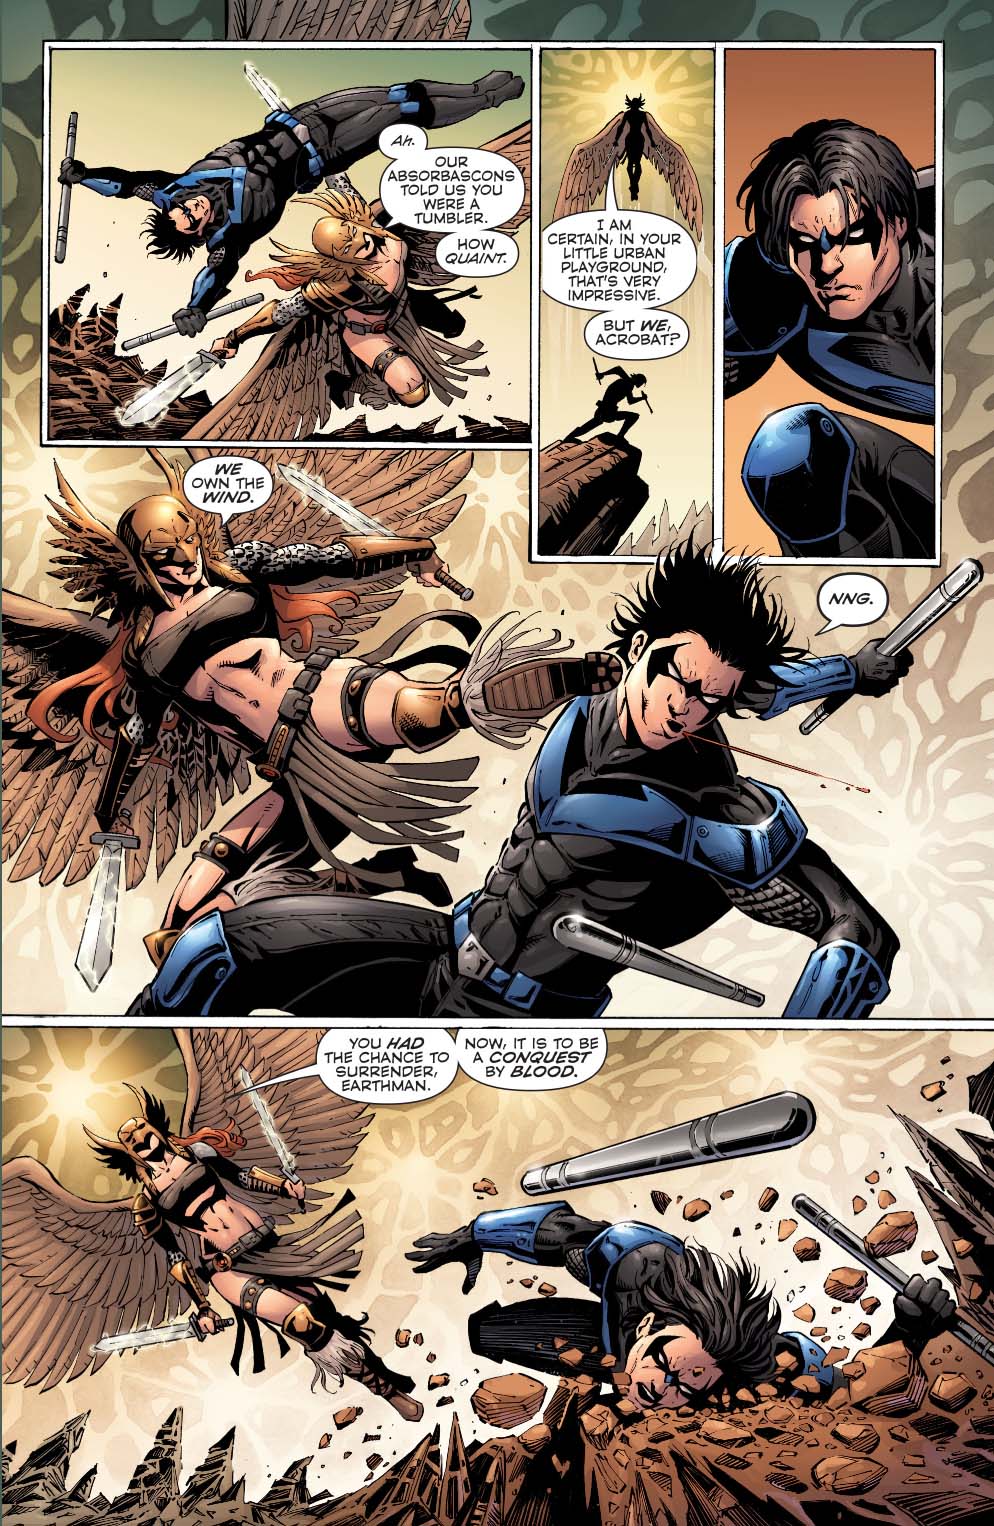 anjaleen princy recommends Wonder Woman Vs Hawkgirl